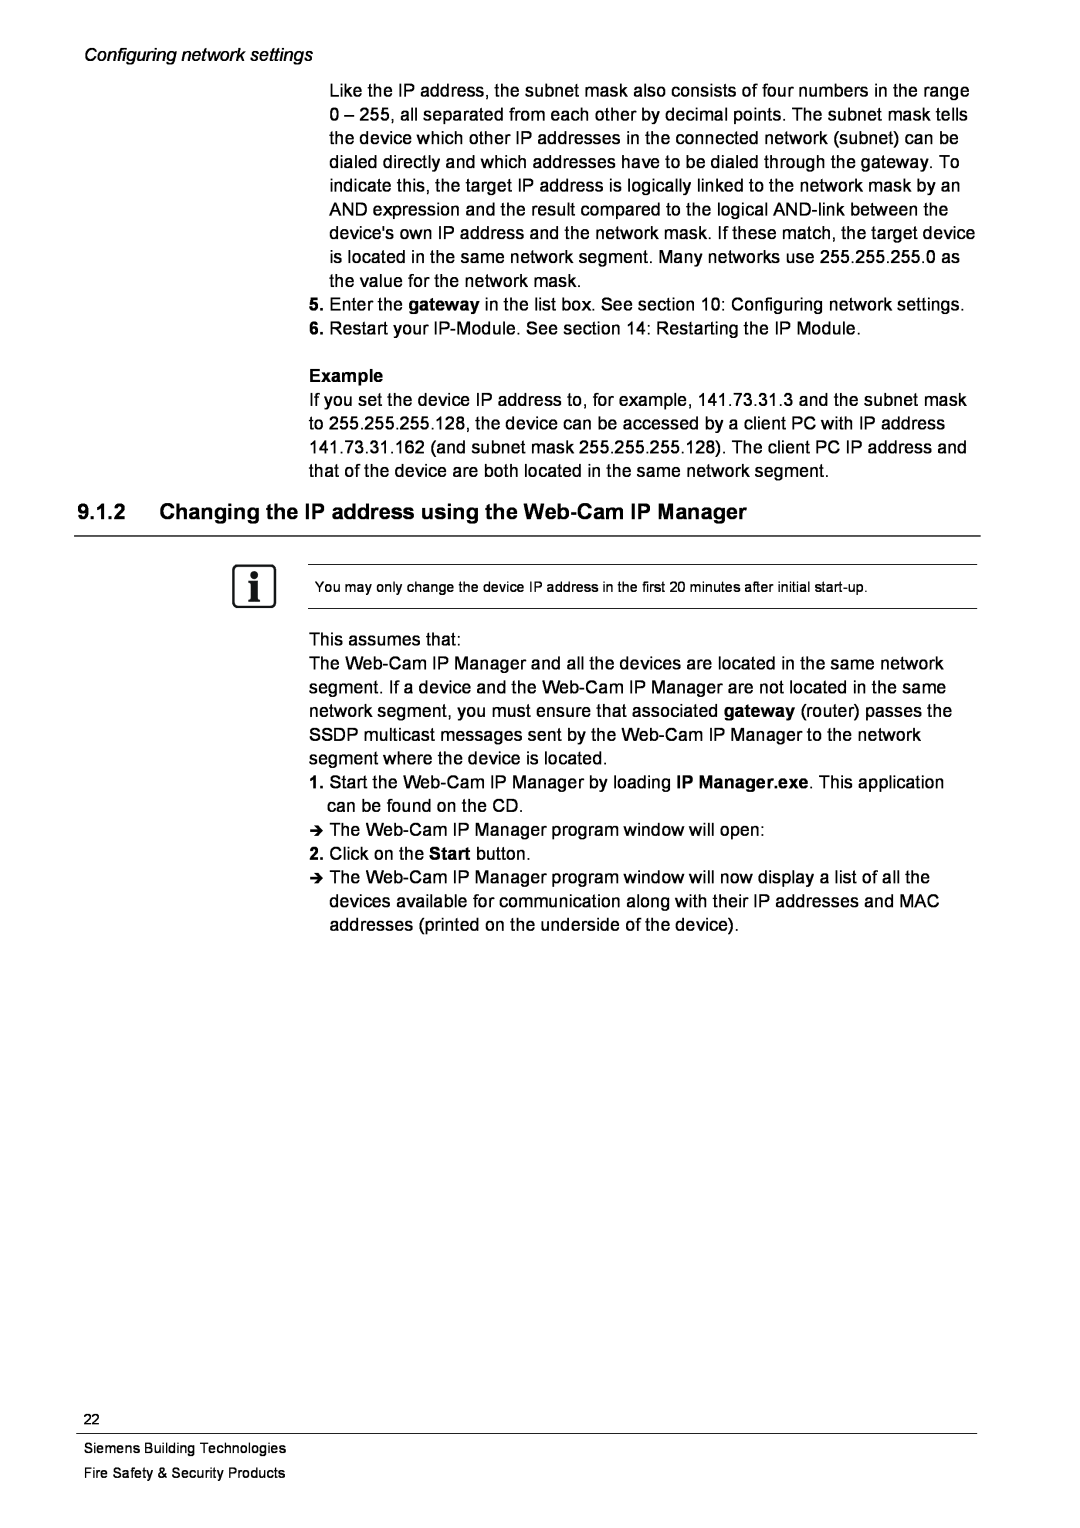 Siemens CFVA-IP user manual 